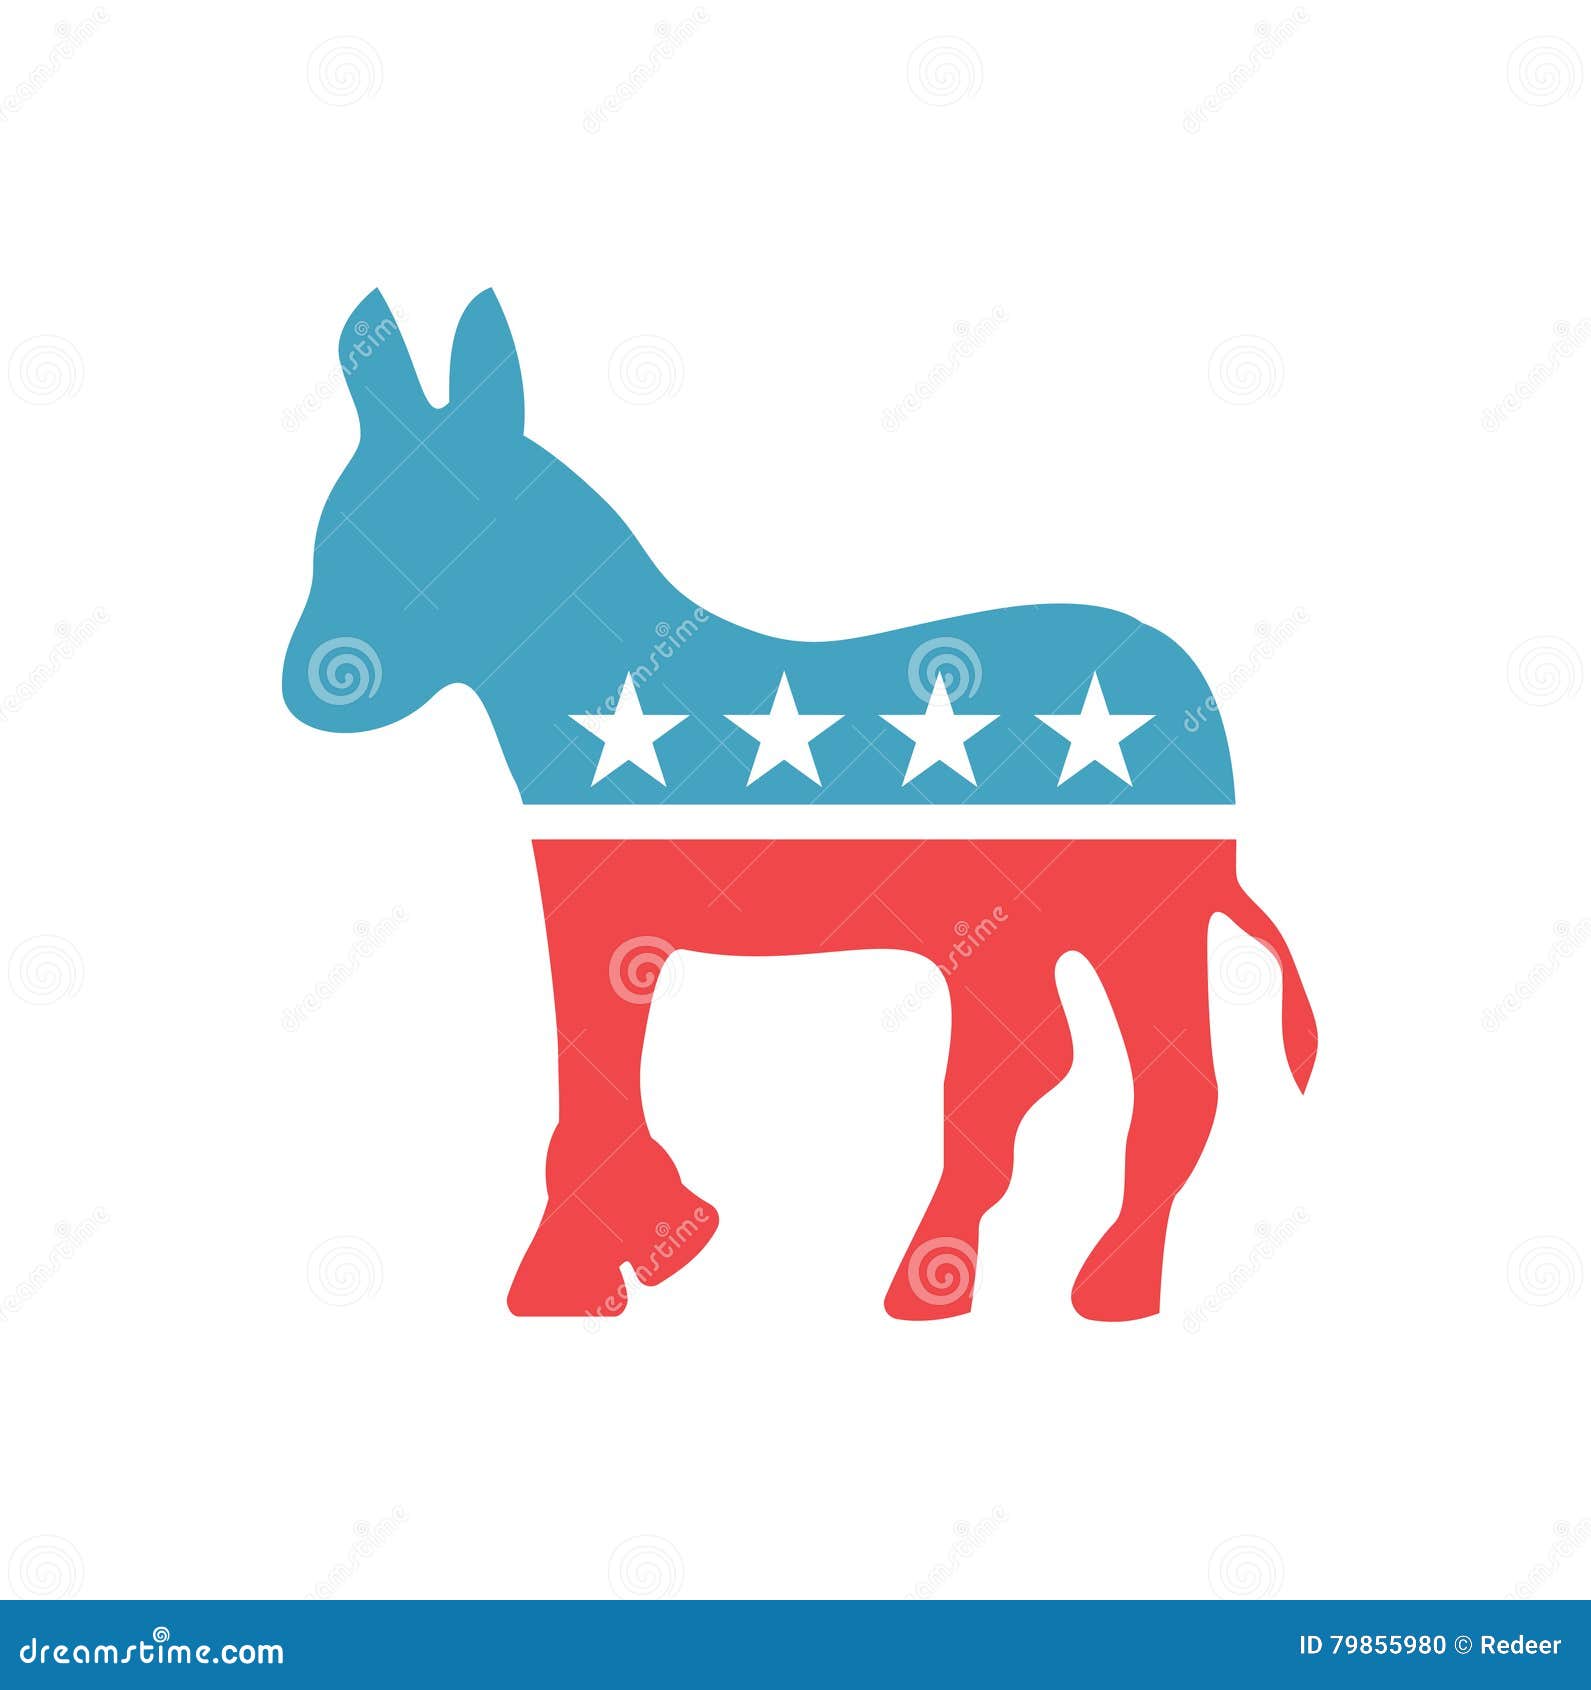 Vector Democratic Donkey Emblem. Democratic Donkey Icon in 